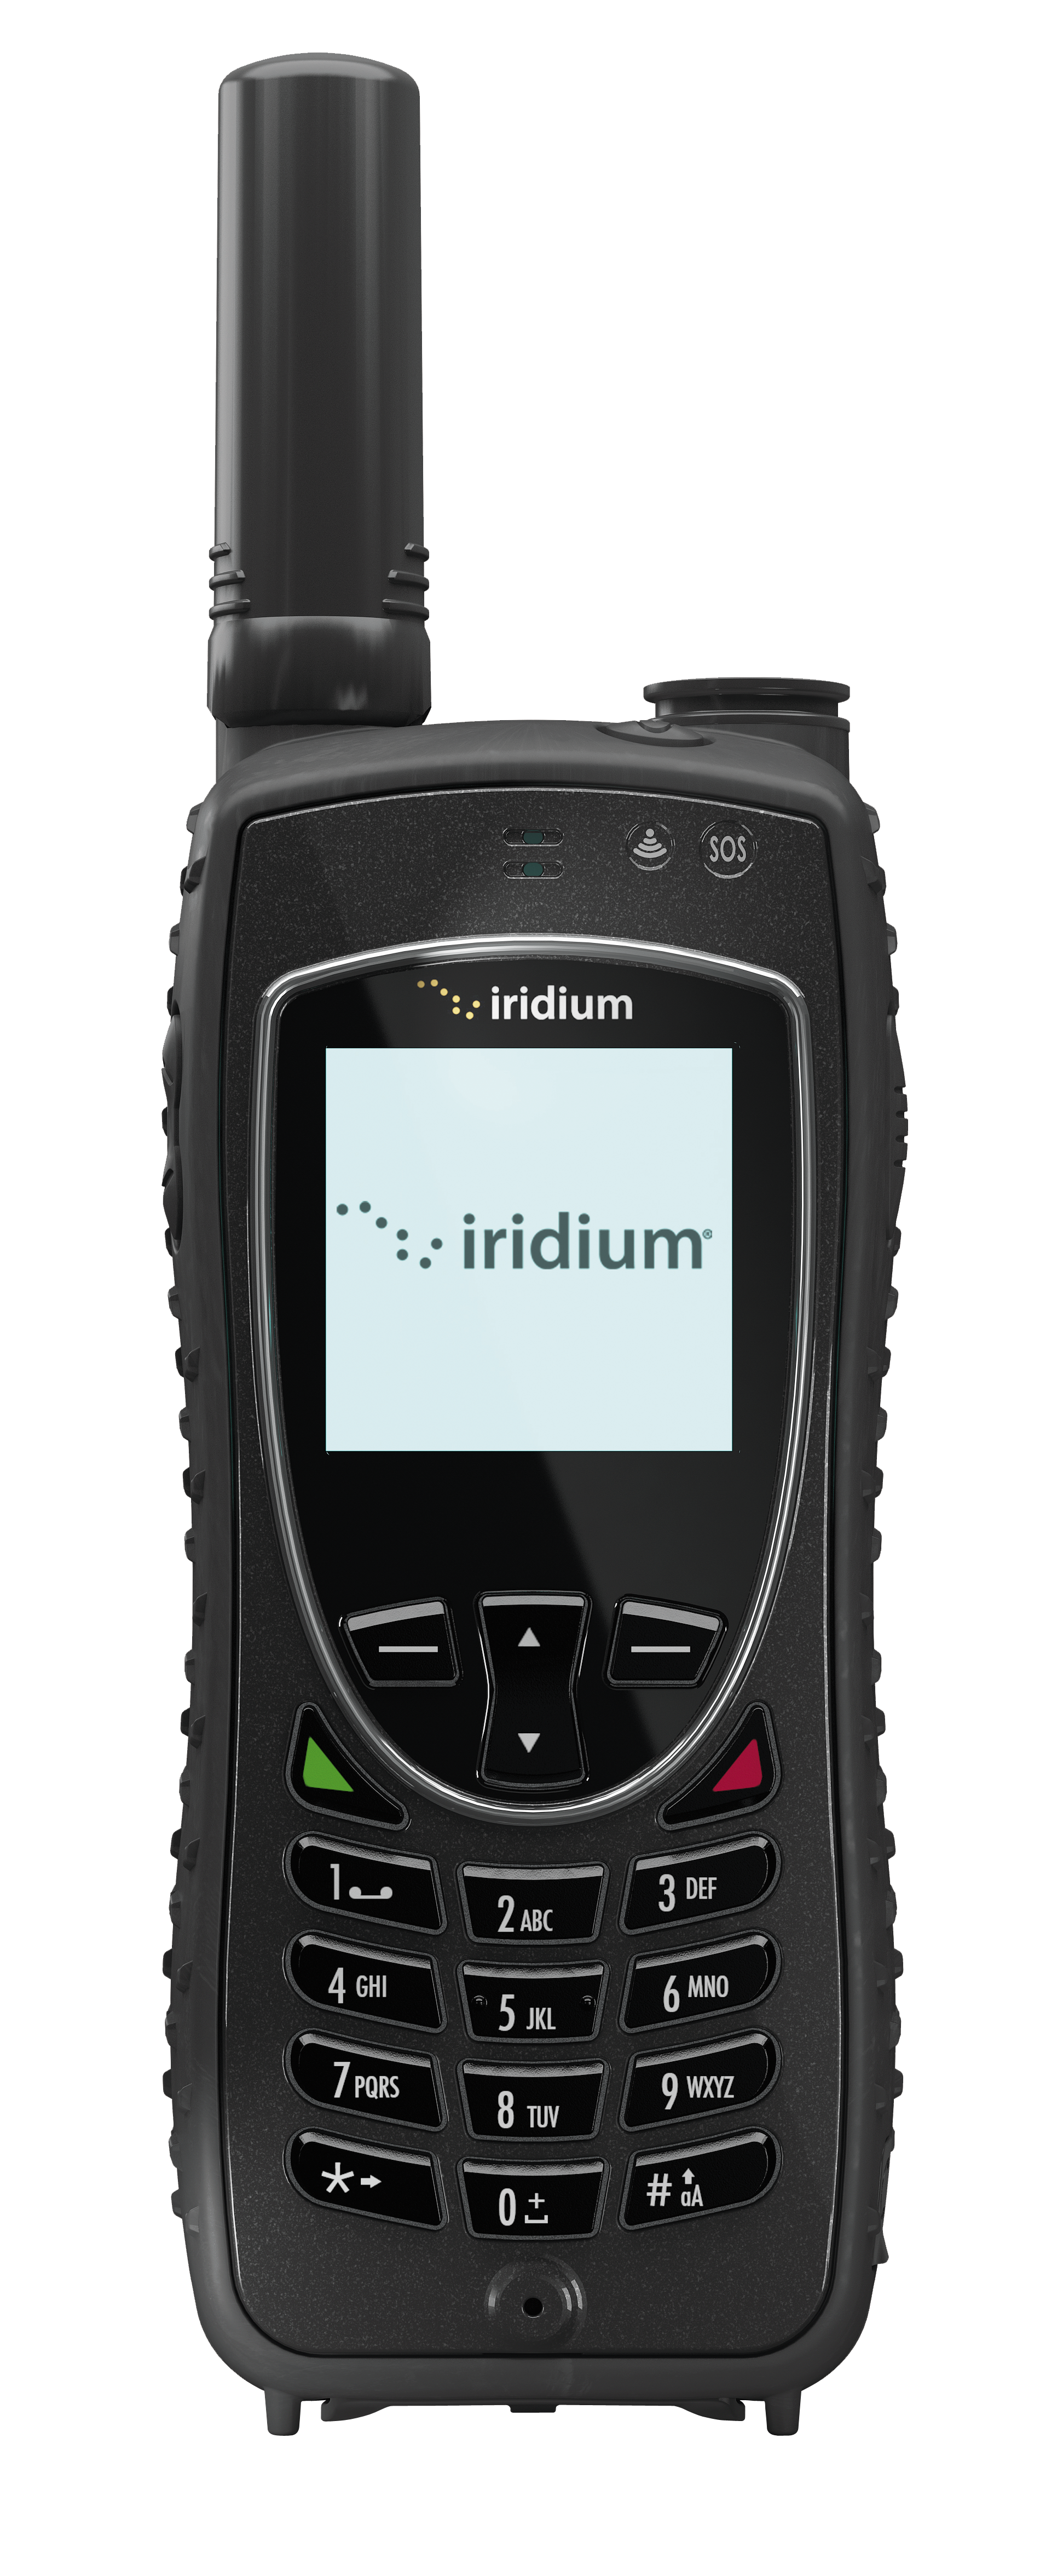 Iridium Extreme satellite phone front view